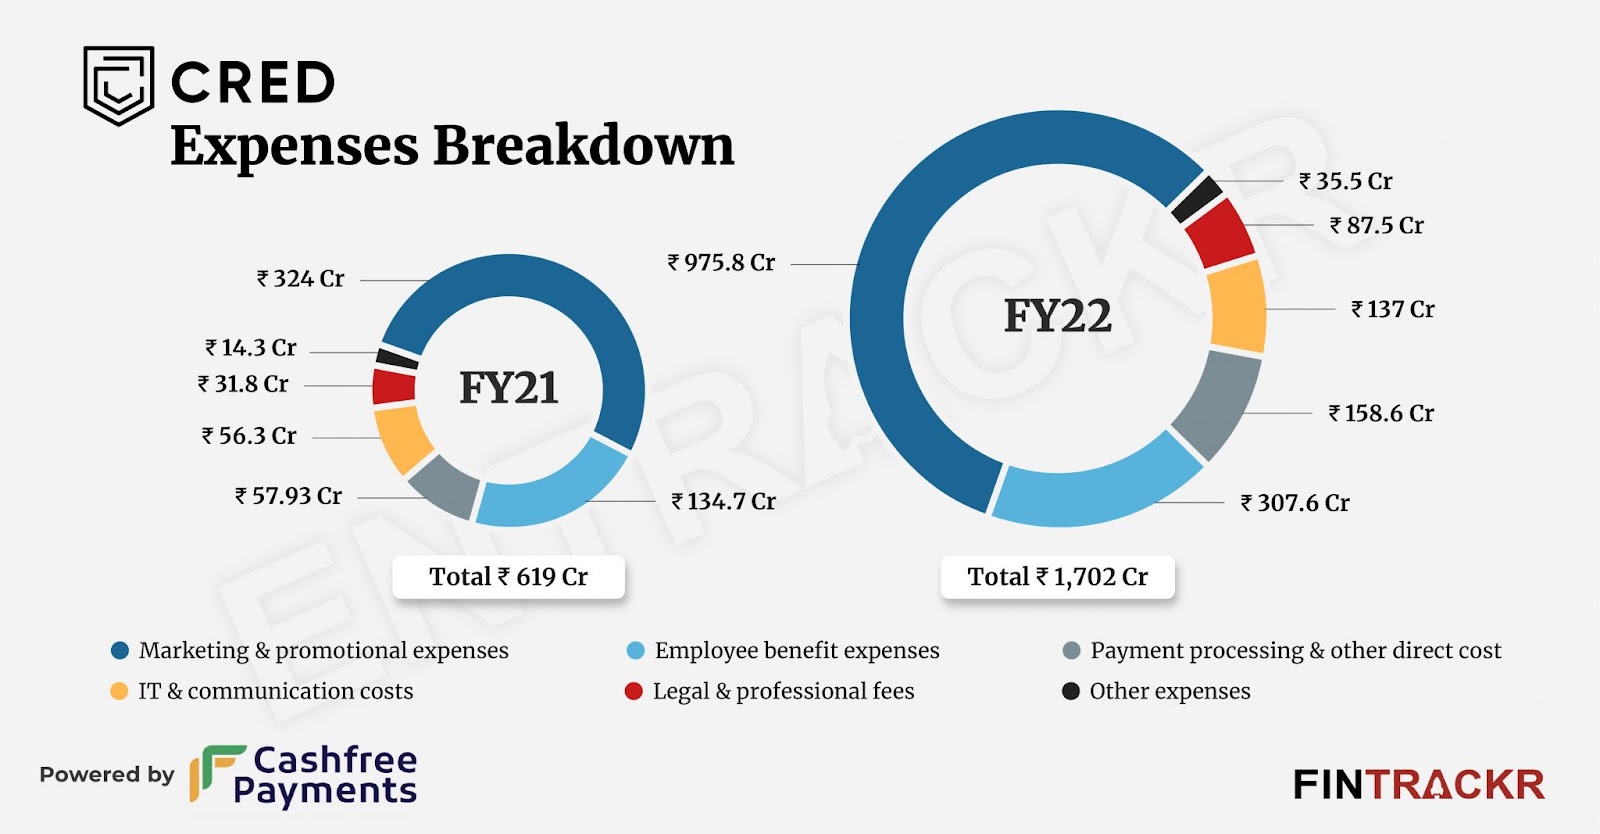 CRED Expenses Breakdown